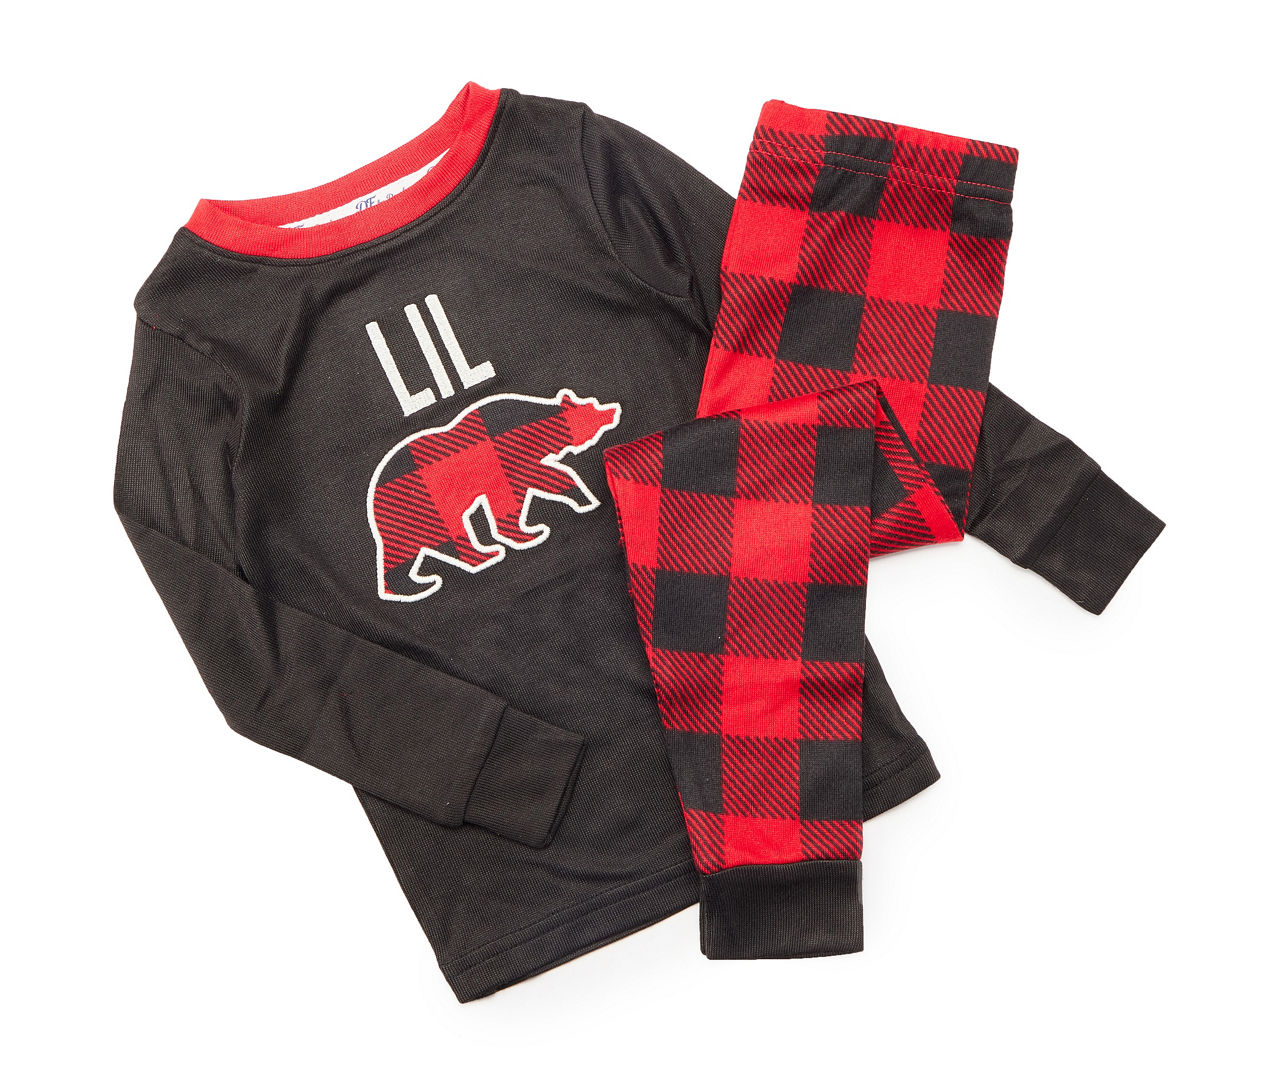 Kids' Size 8 "Lil" Black & Red Buffalo Check Bear 2-Piece Pajama Set